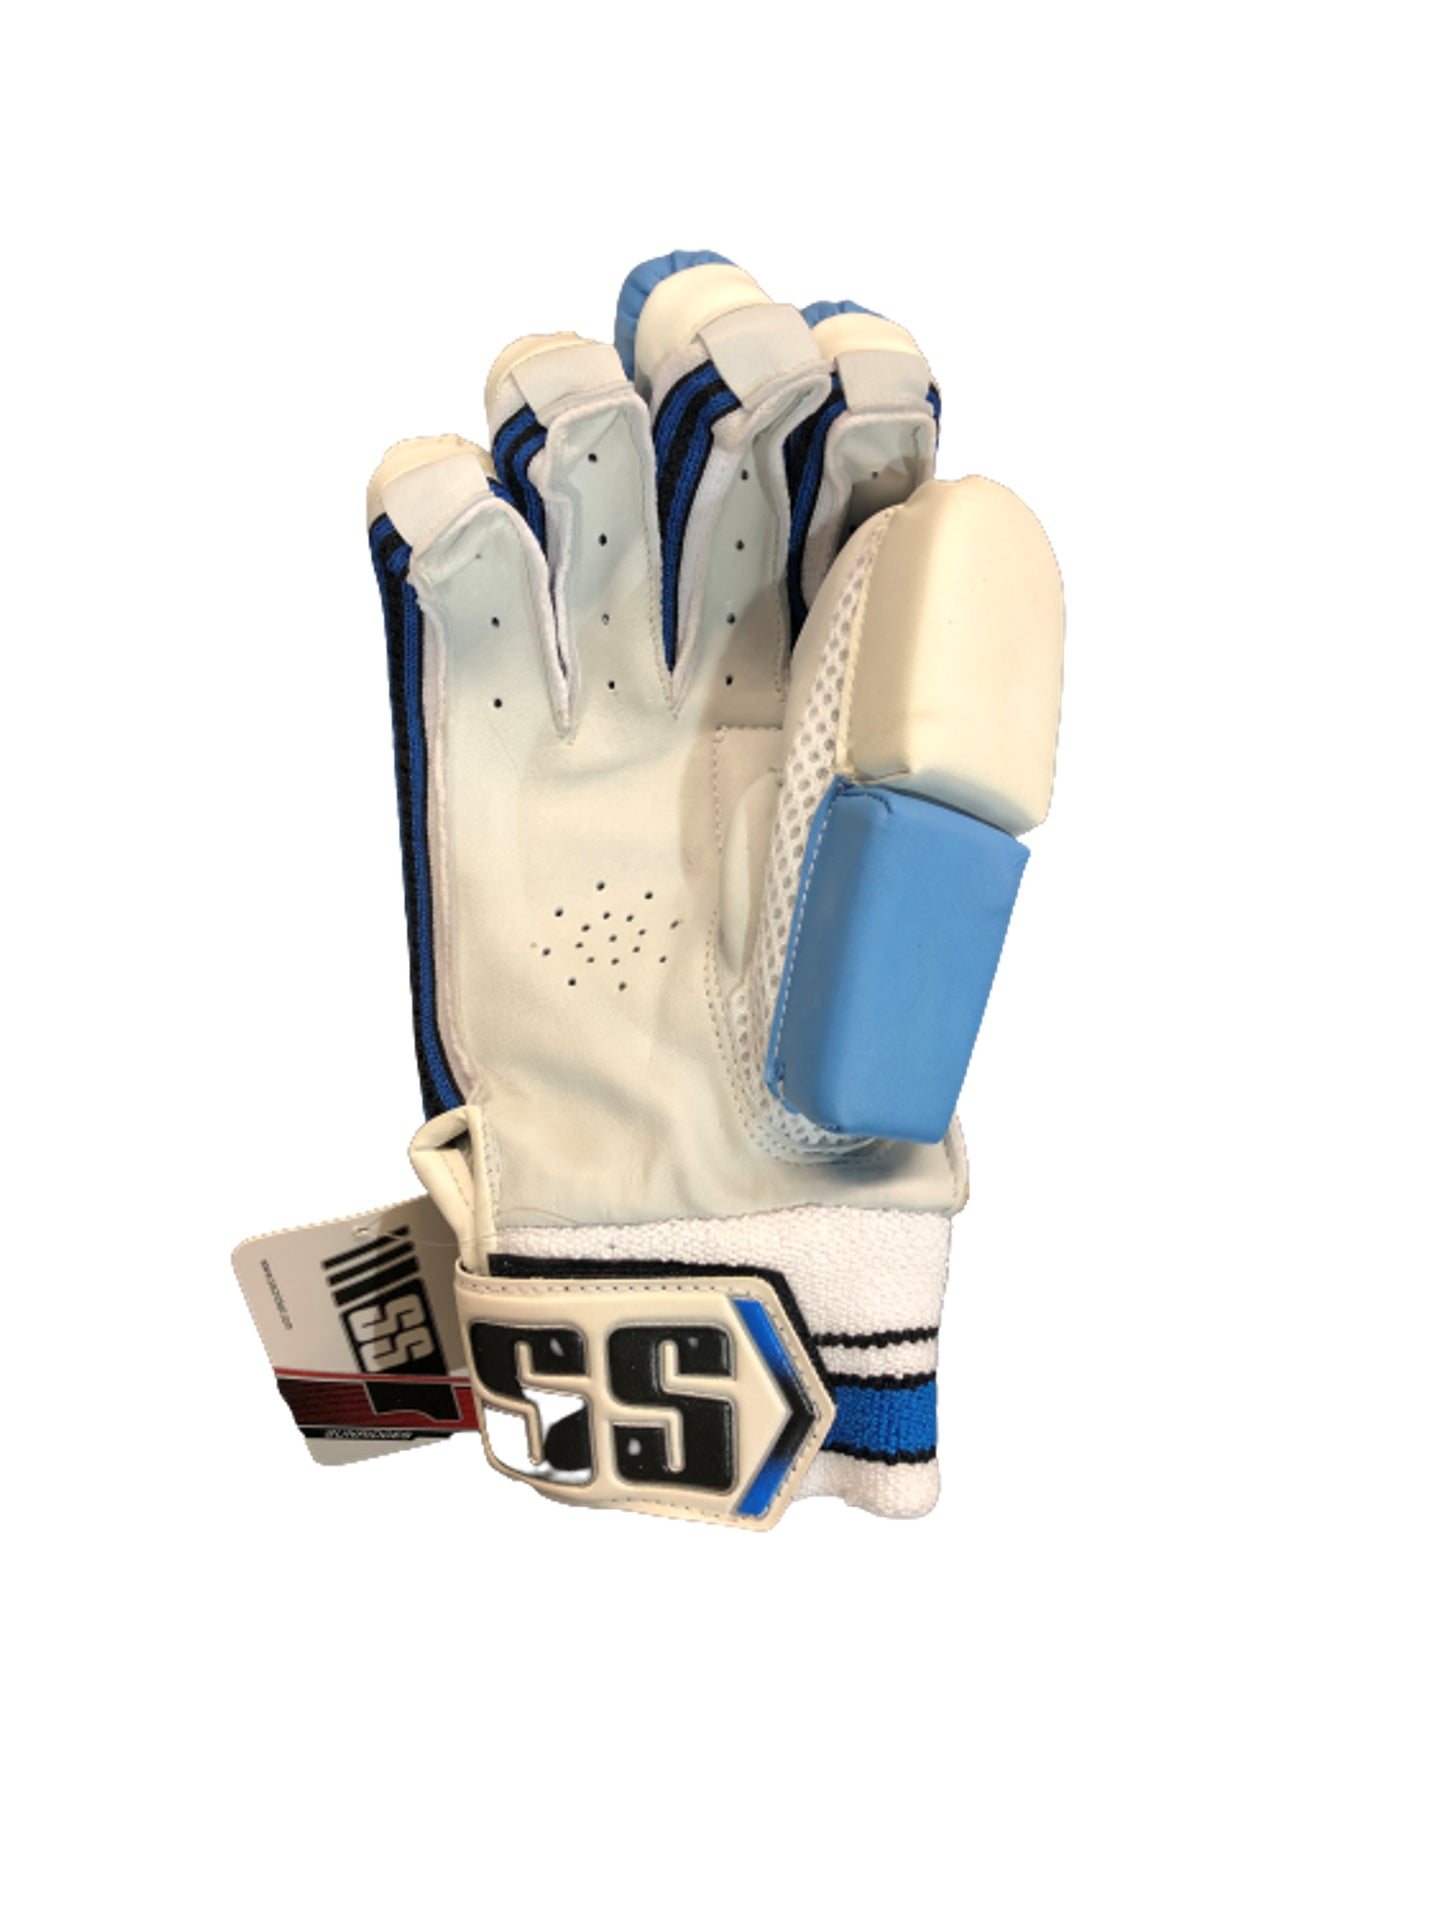 SS Ton Super Cricket Batting Gloves (Platino)